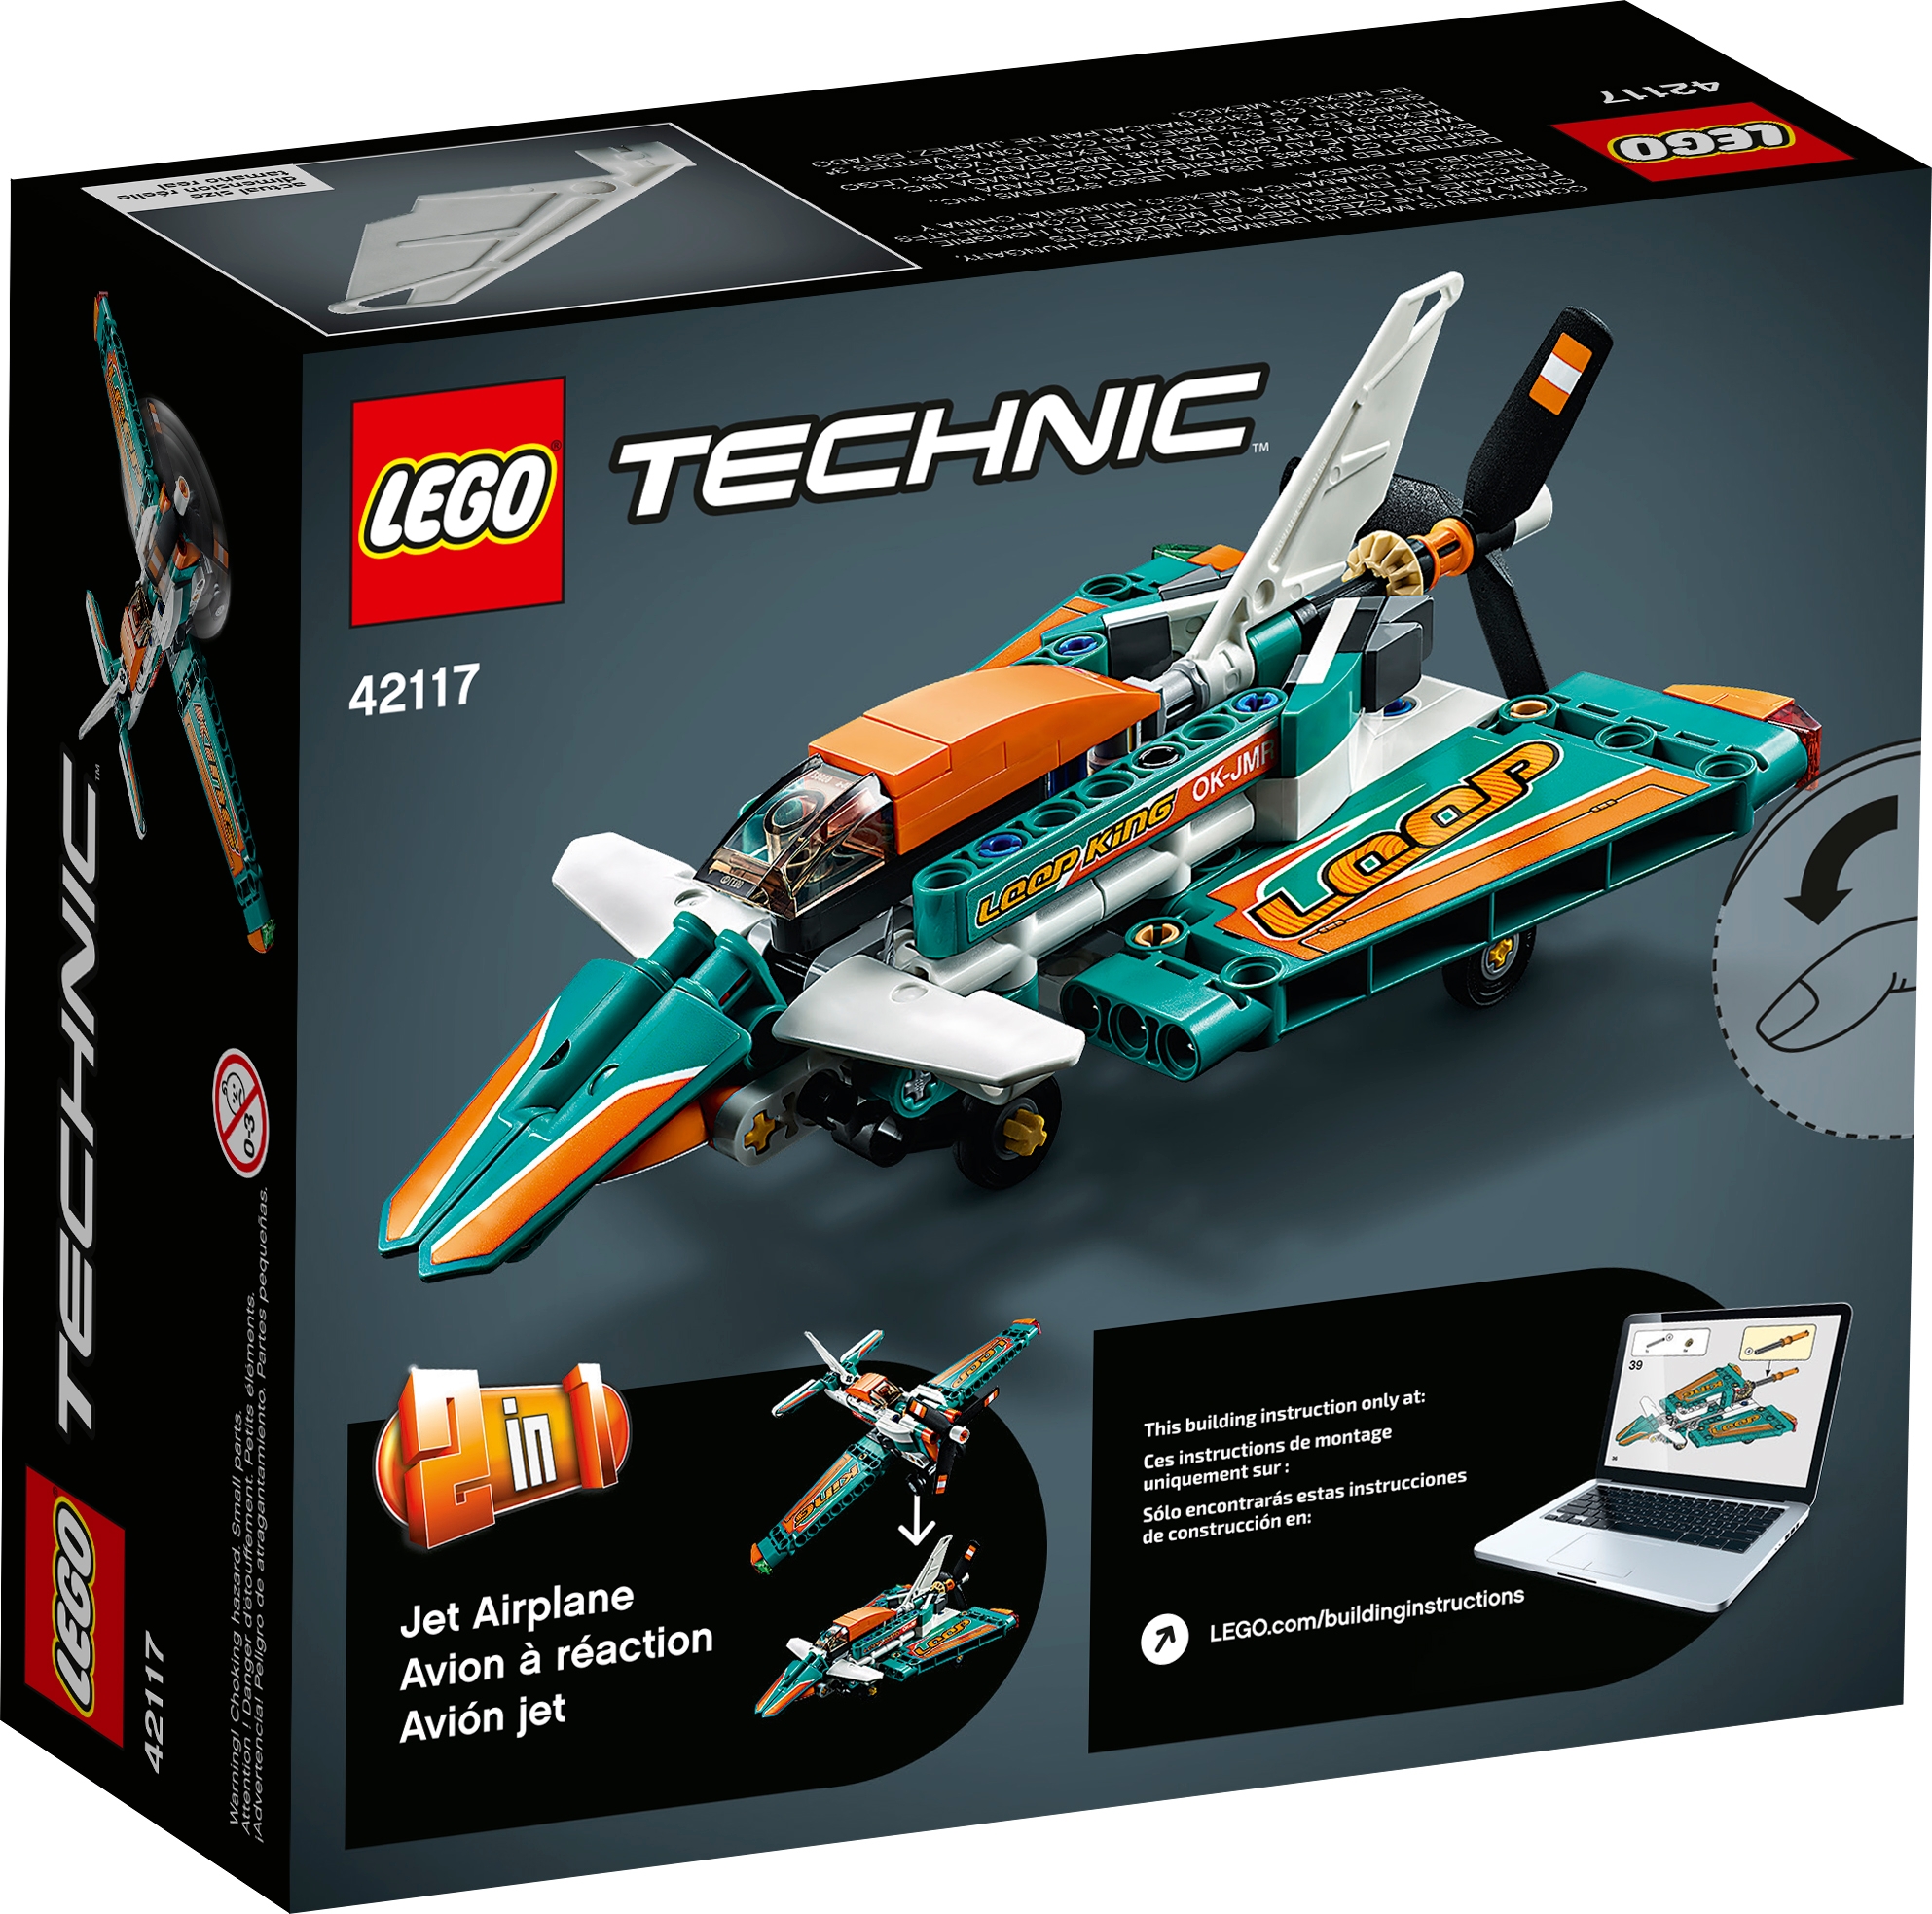 Technic Lego Plane | estudioespositoymiguel.com.ar